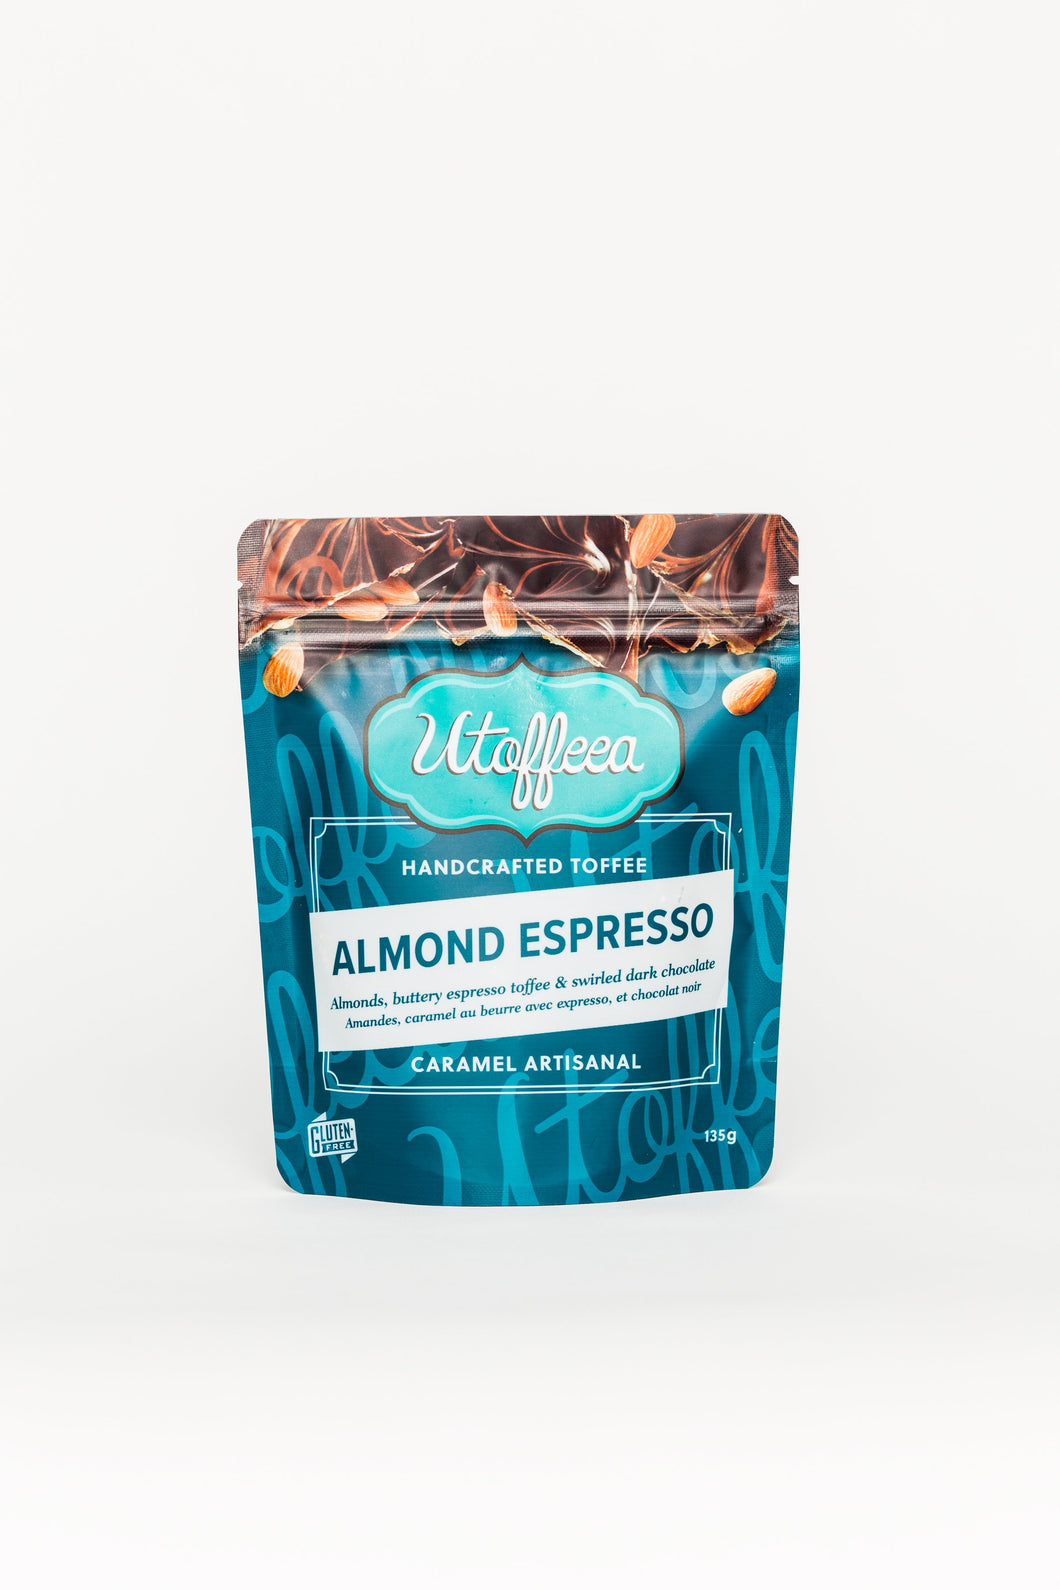 Utoffeea Almond Espresso Handcrafted Artisanal Caramels